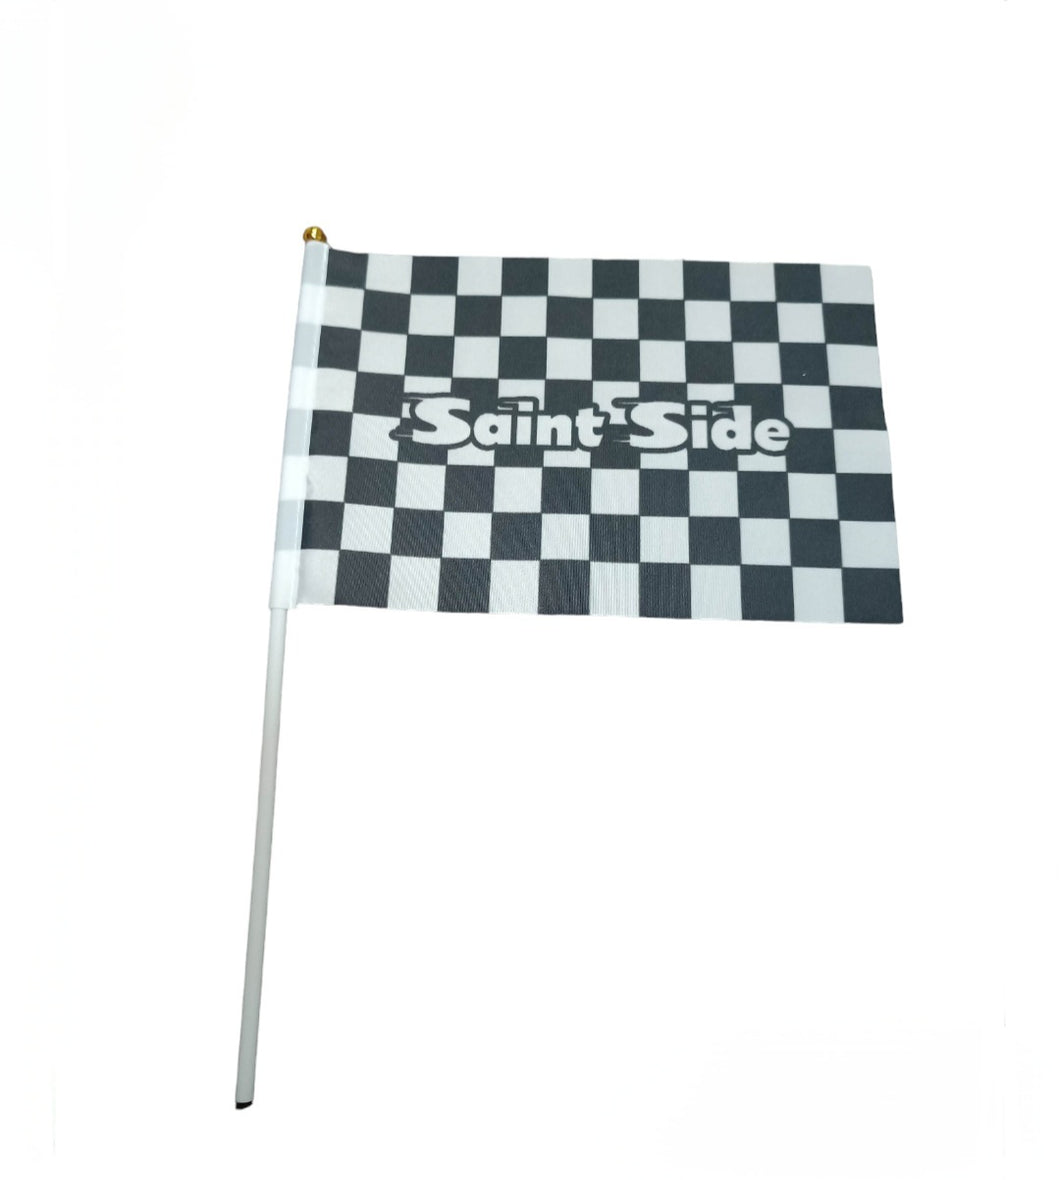 15th Saint Side Show & Shine Mini Flag - 2 pack!